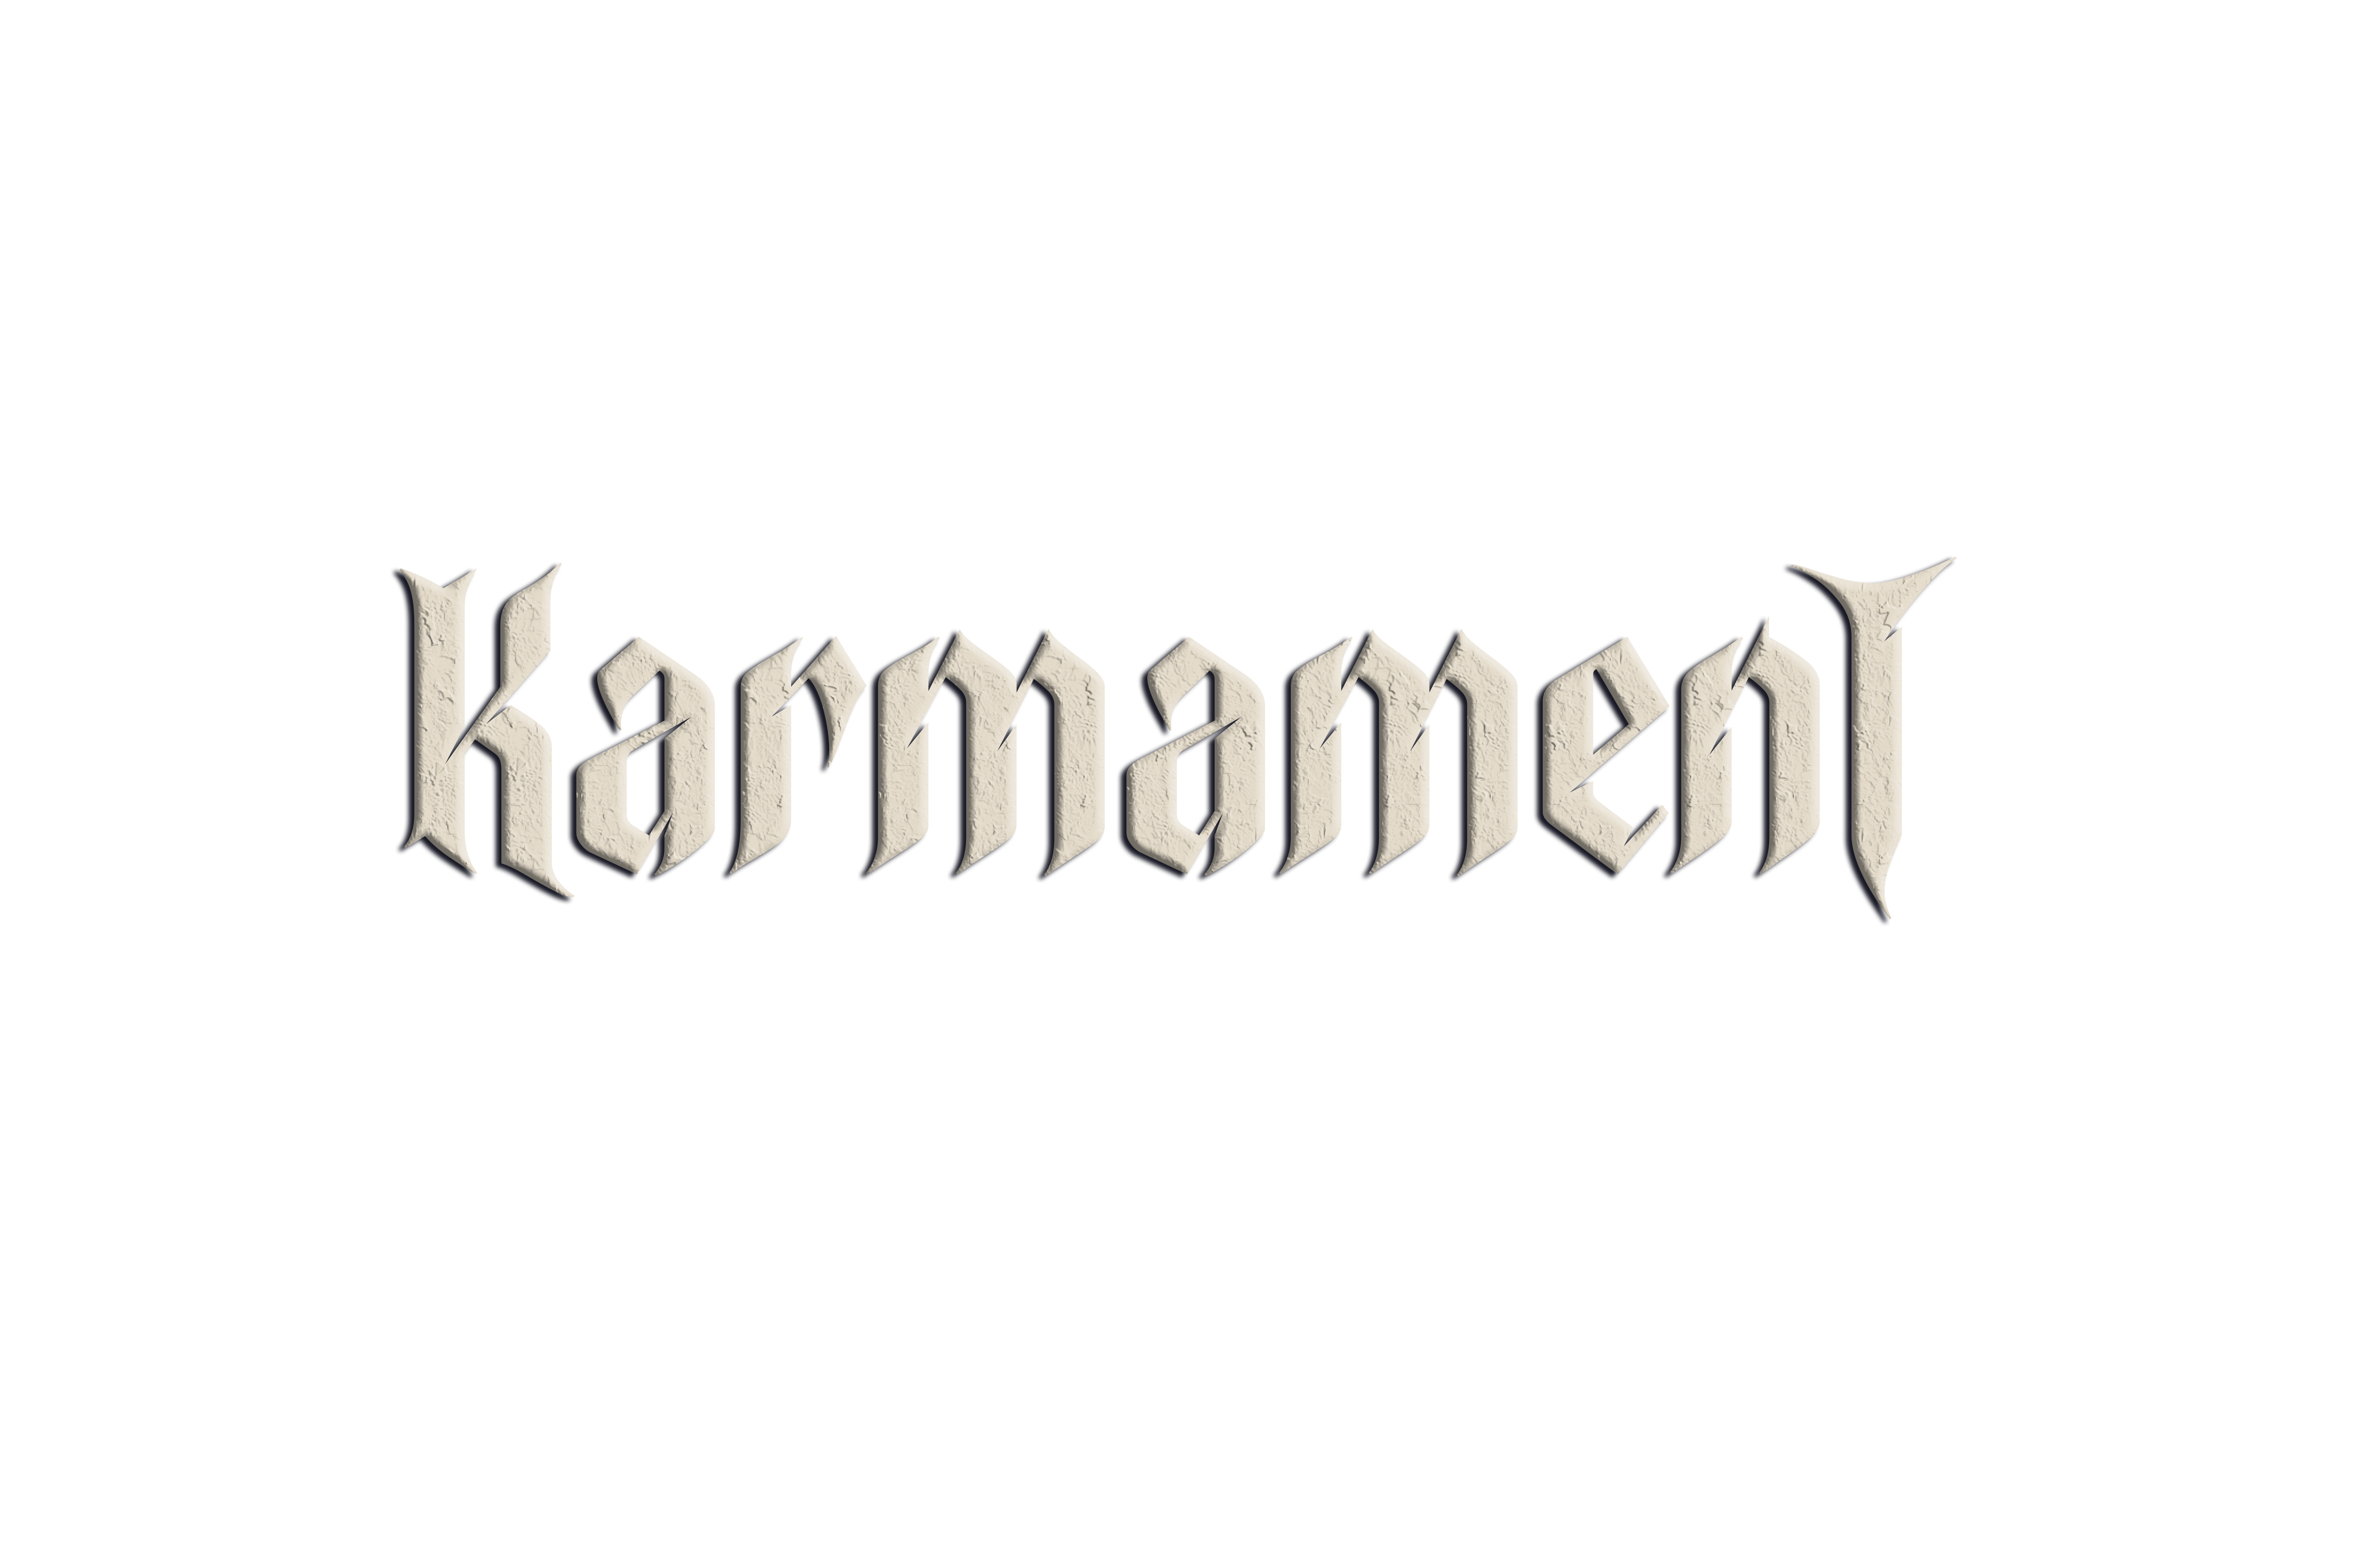 White Karmament logo with transparent background